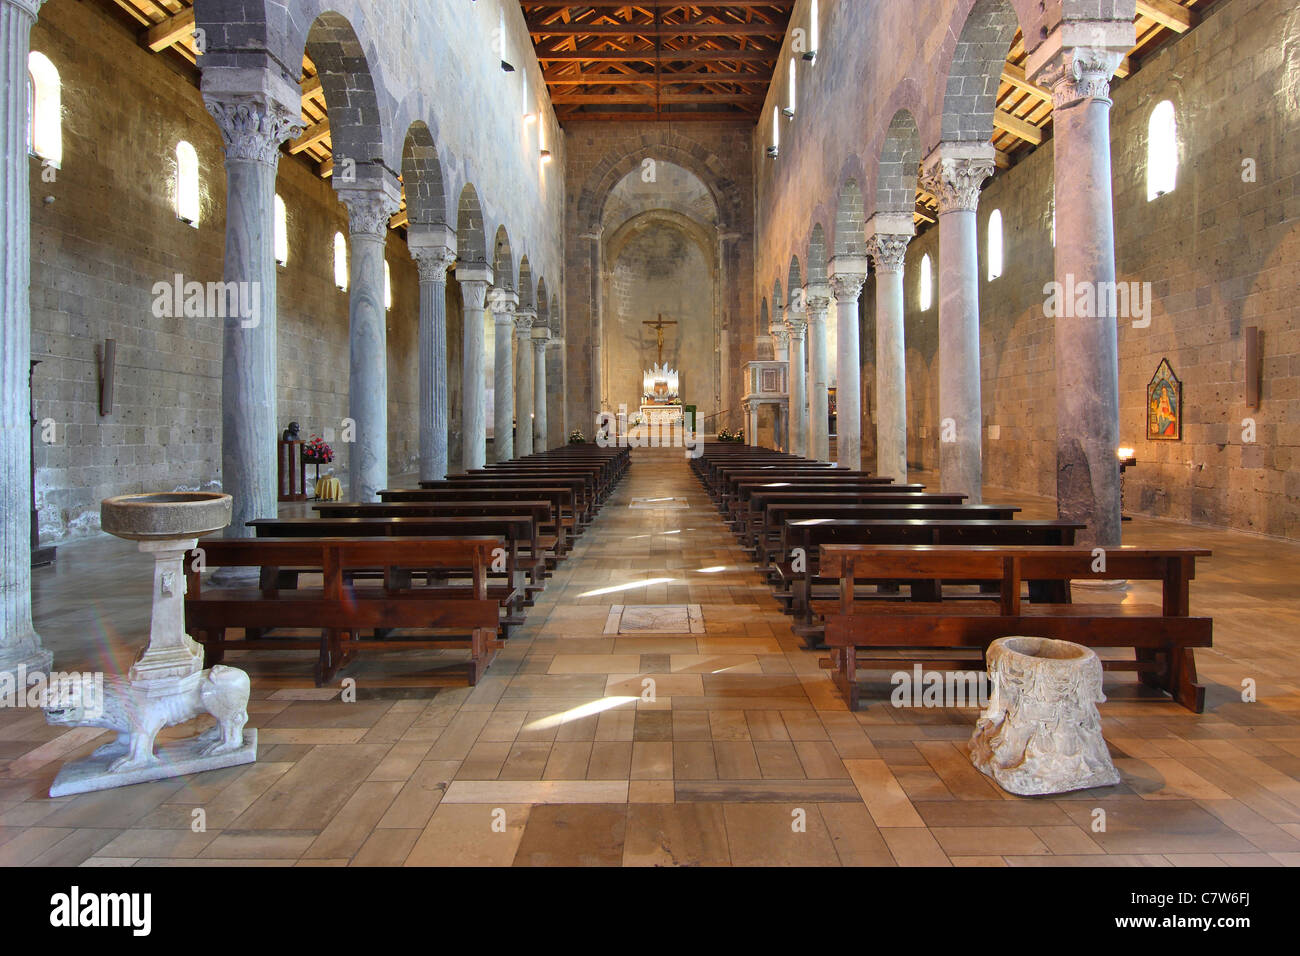 Italy, Campania, Caserta Vecchia, the Cathedral interior Stock Photo